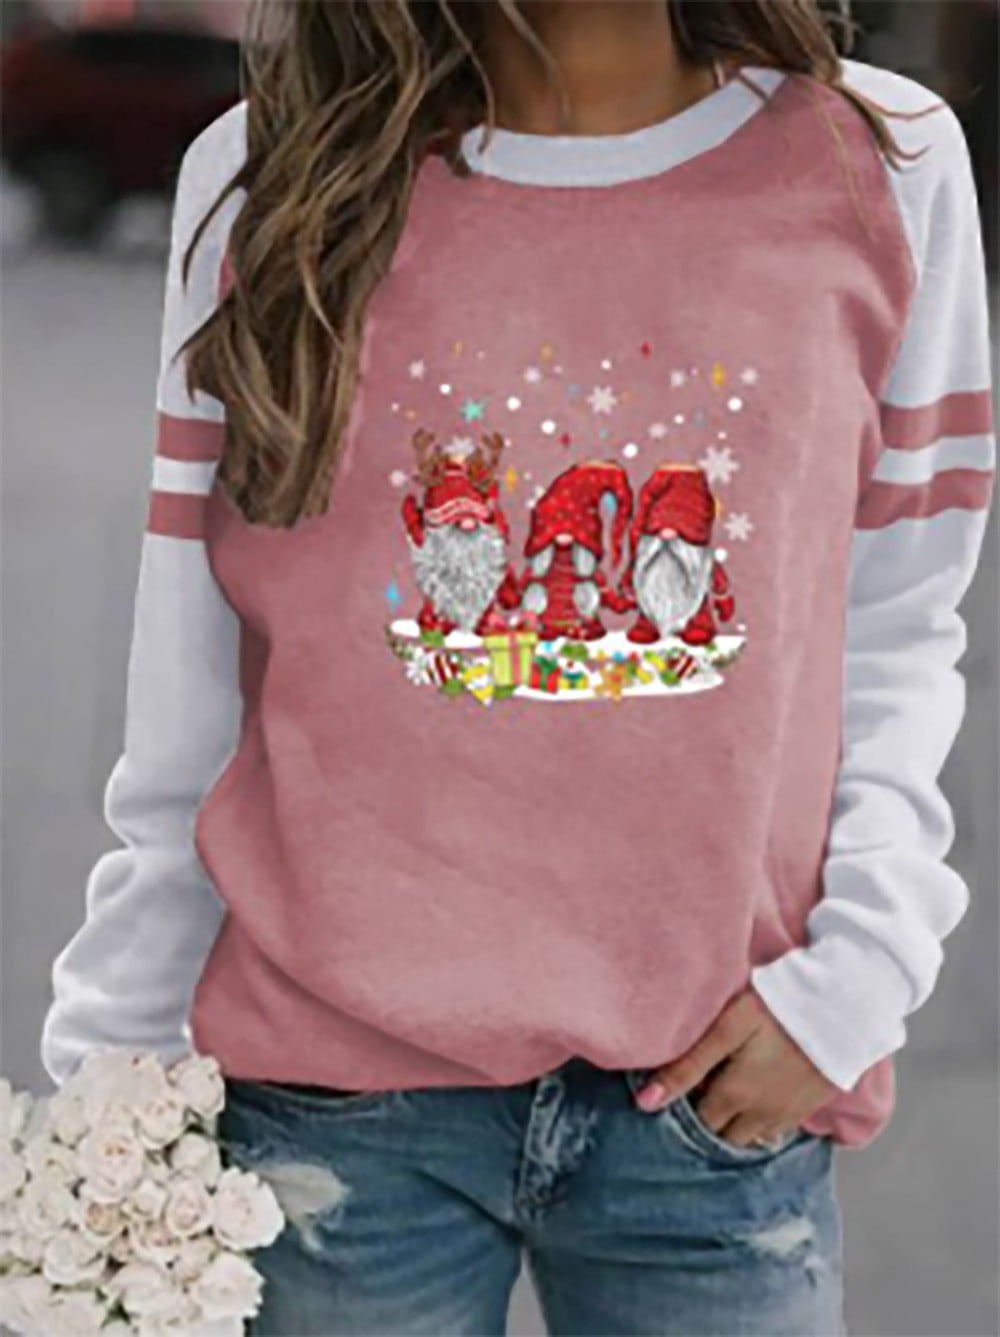 Gnomes Christmas Sweatshirt Women Leopard Plaid Gnome Graphic Shirt Casual Long Sleeve Crewneck Pullover Tops